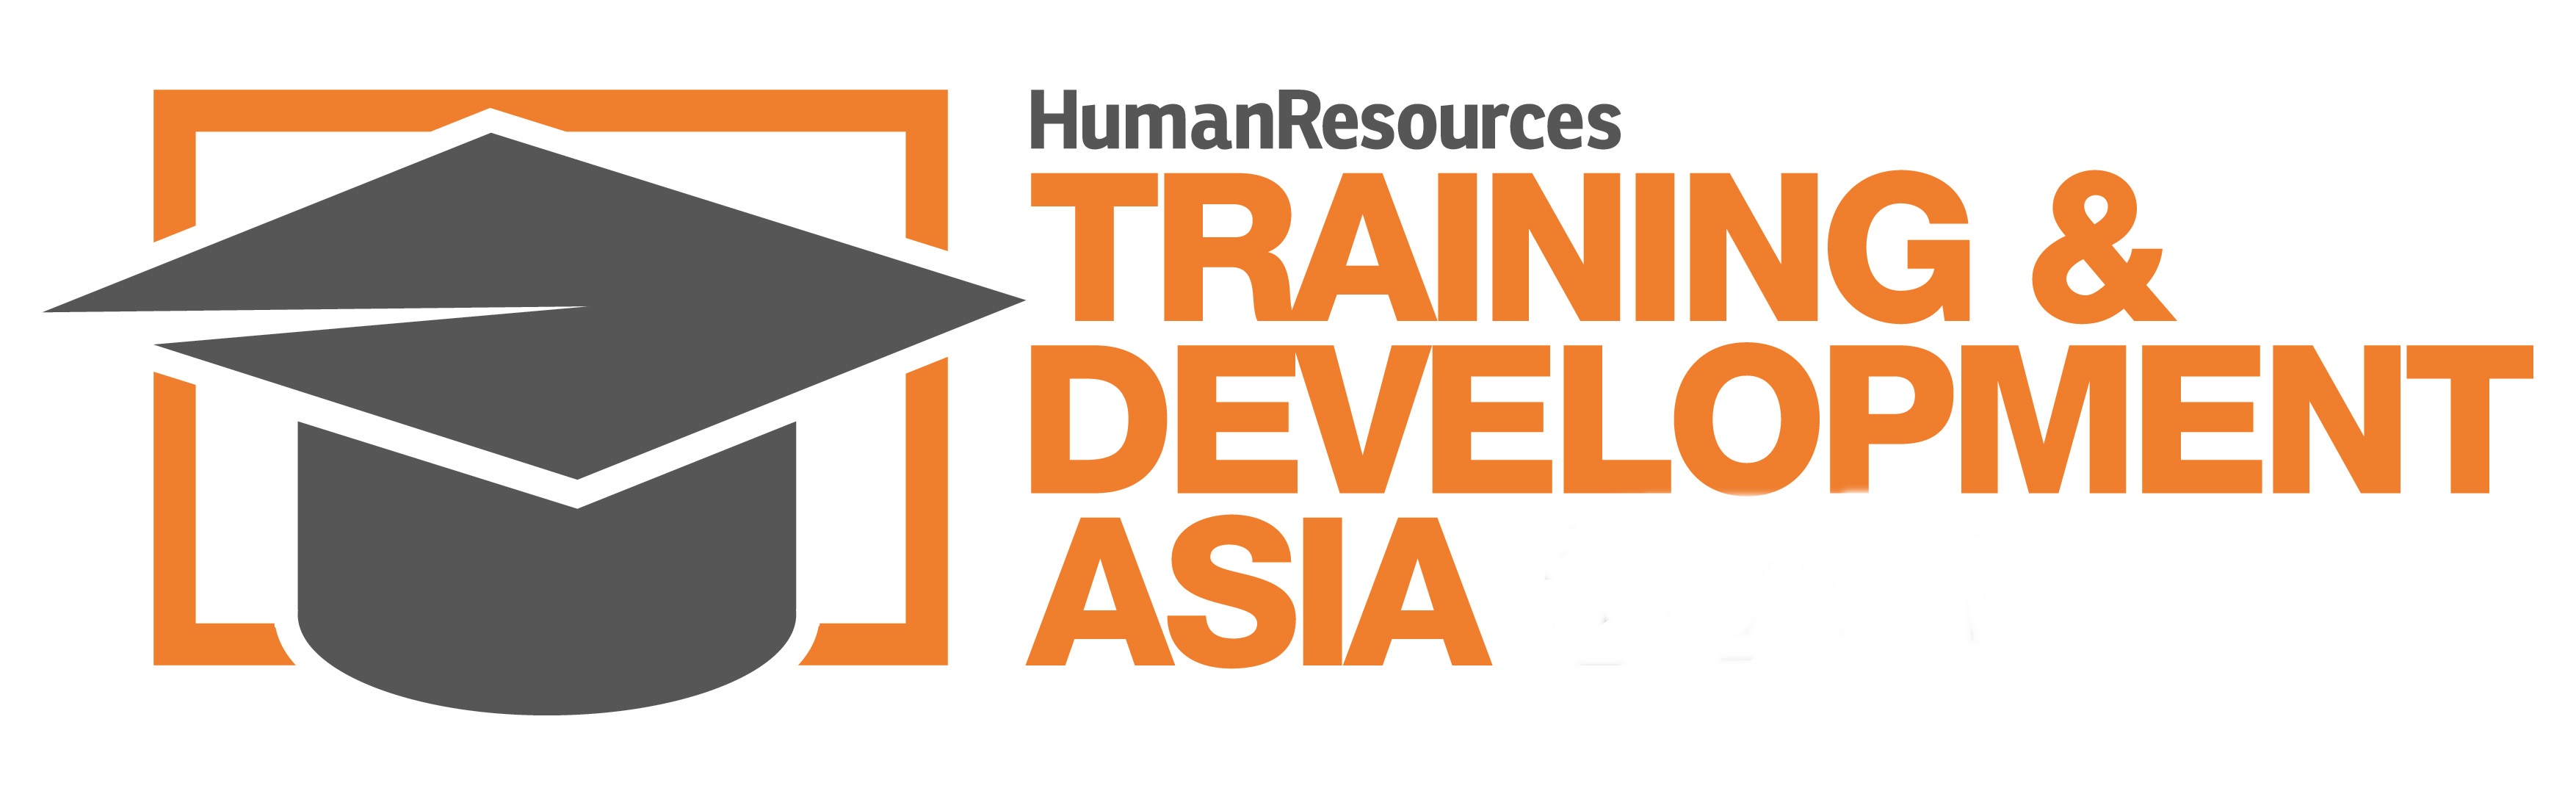 Training Development logo.